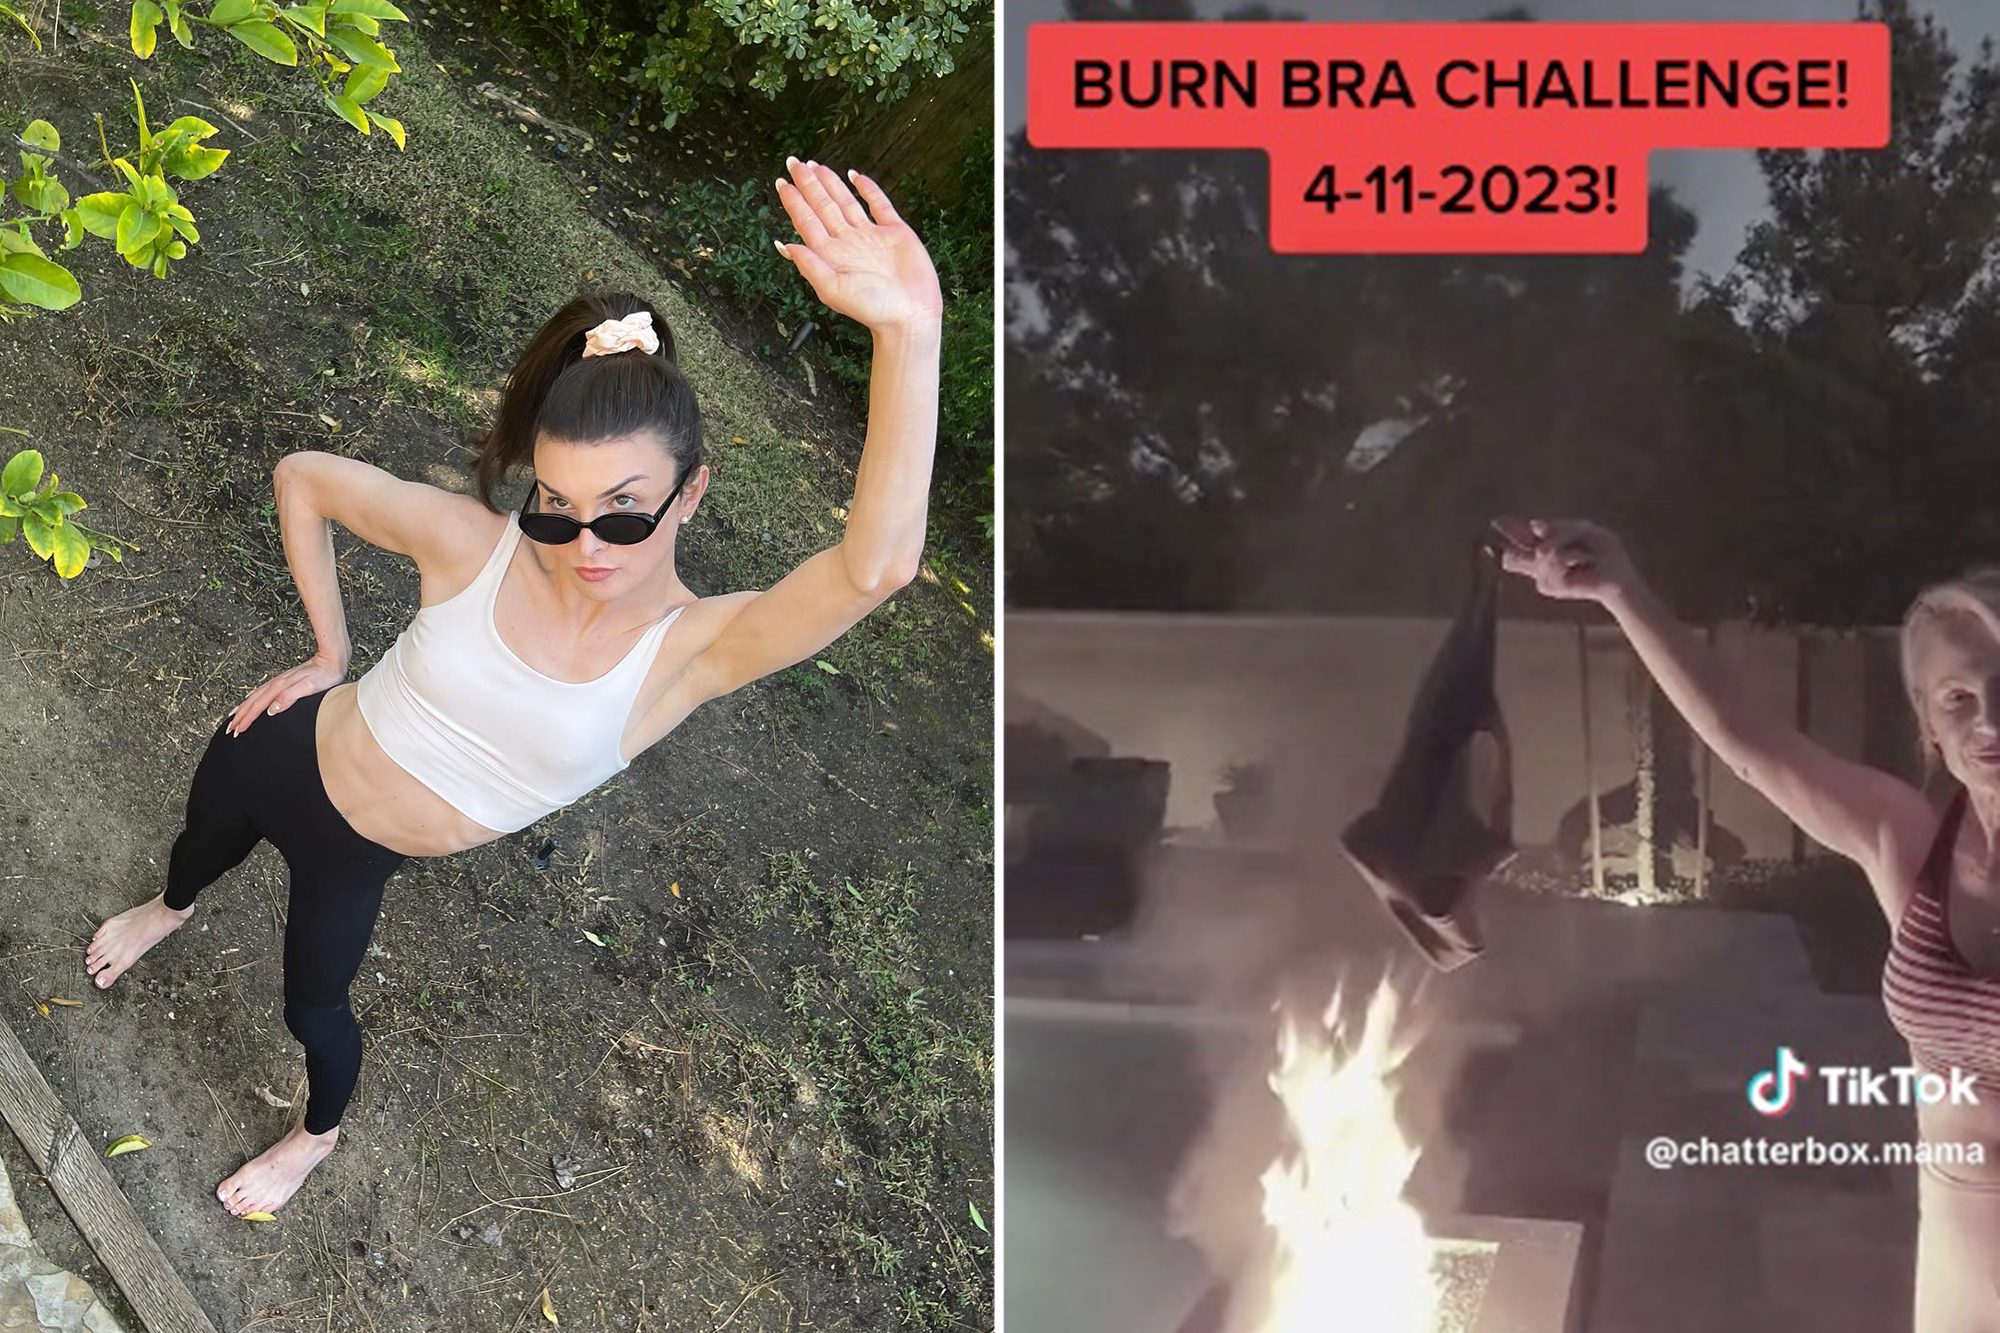 Burn Bra Challenge' on TikTok over Dylan Mulvaney Nike ads